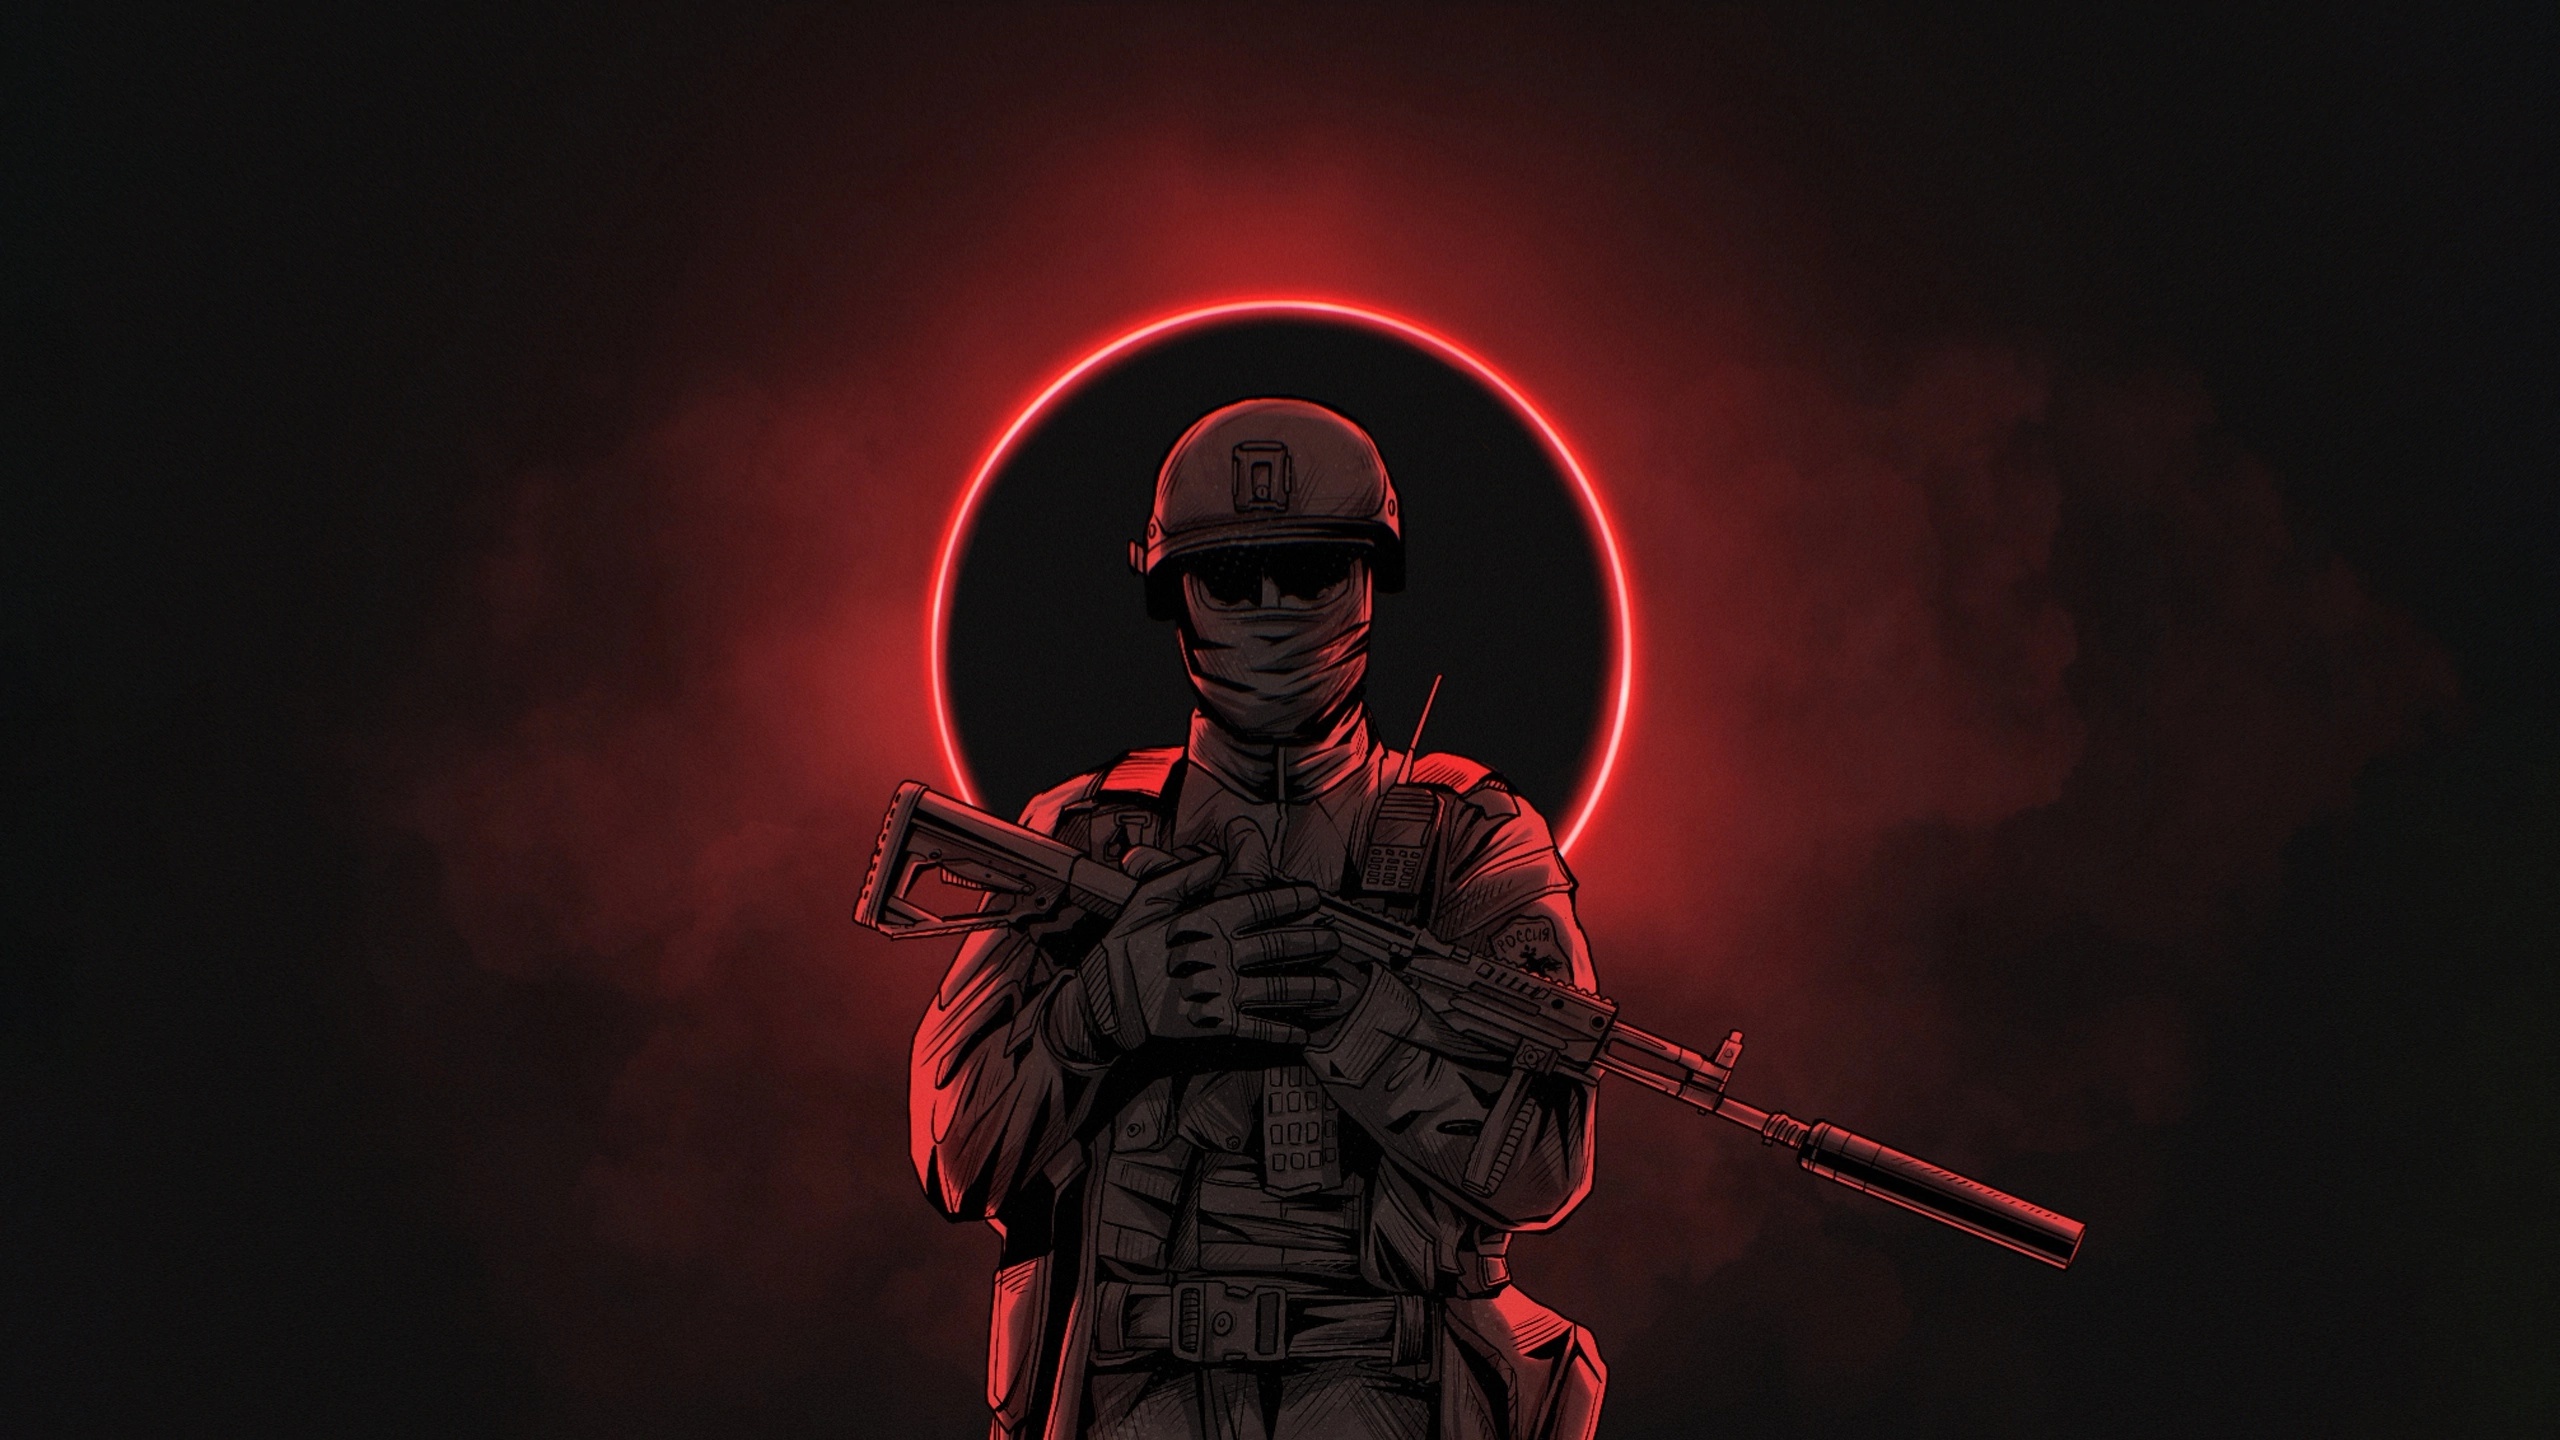 Mercenary Digital Art Soldier Simple Background Minimalism Gun Helmet 2560x1440